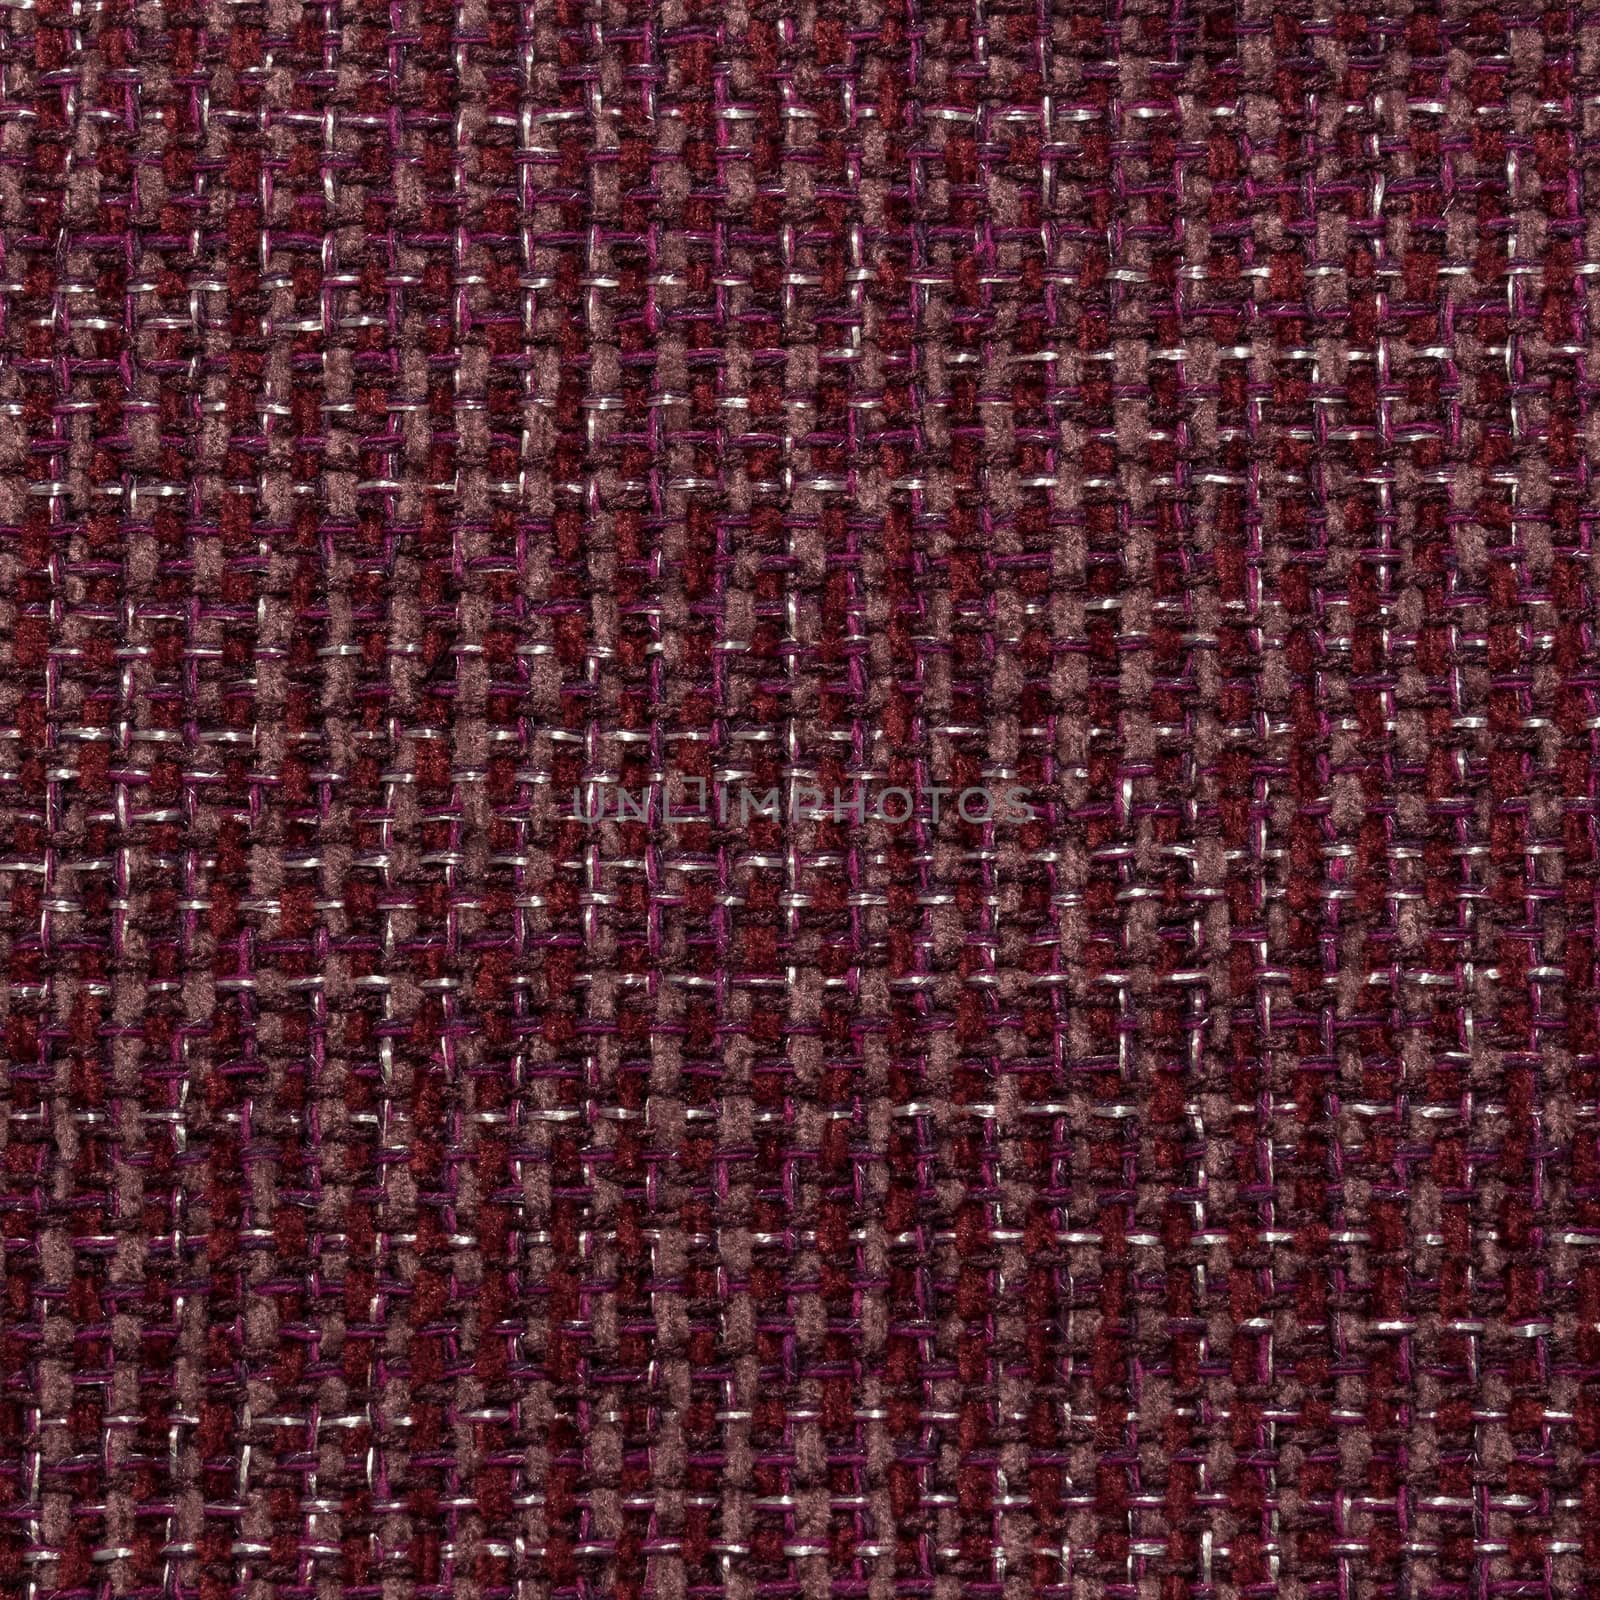 Canvas fabric texture by alanstix64